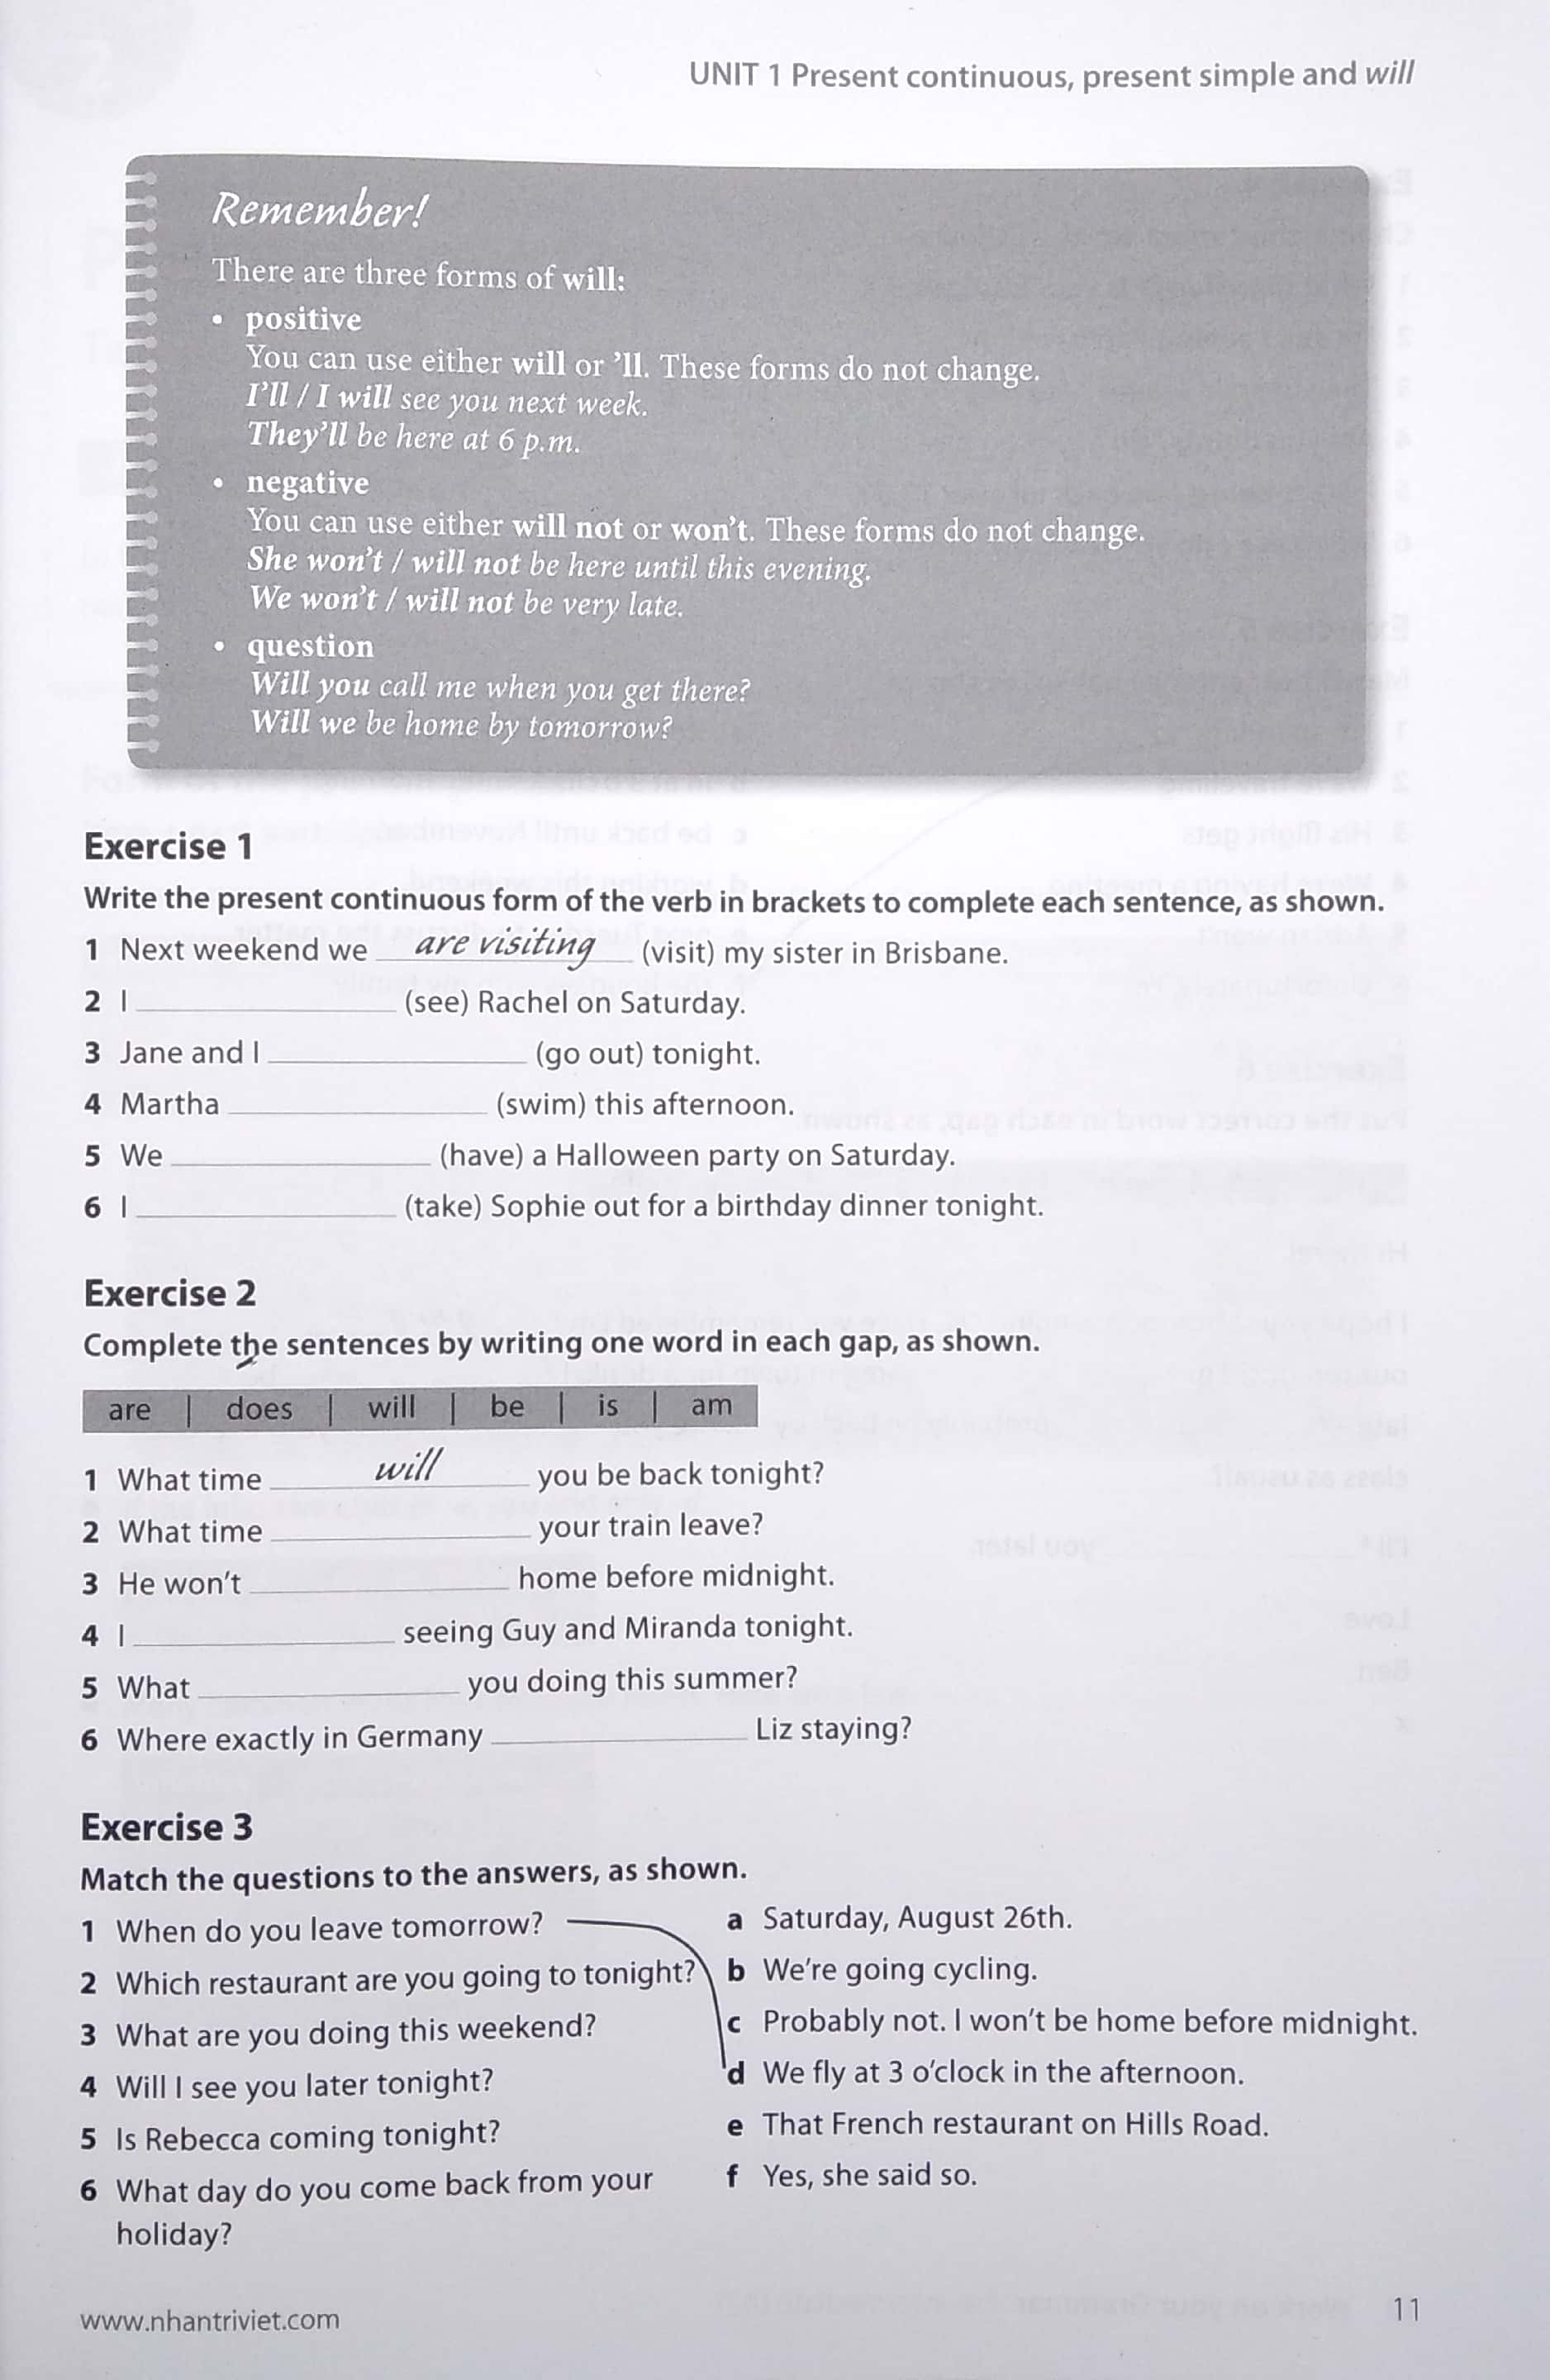 Work On Your Grammar - Pre - intermediate A2 PDF